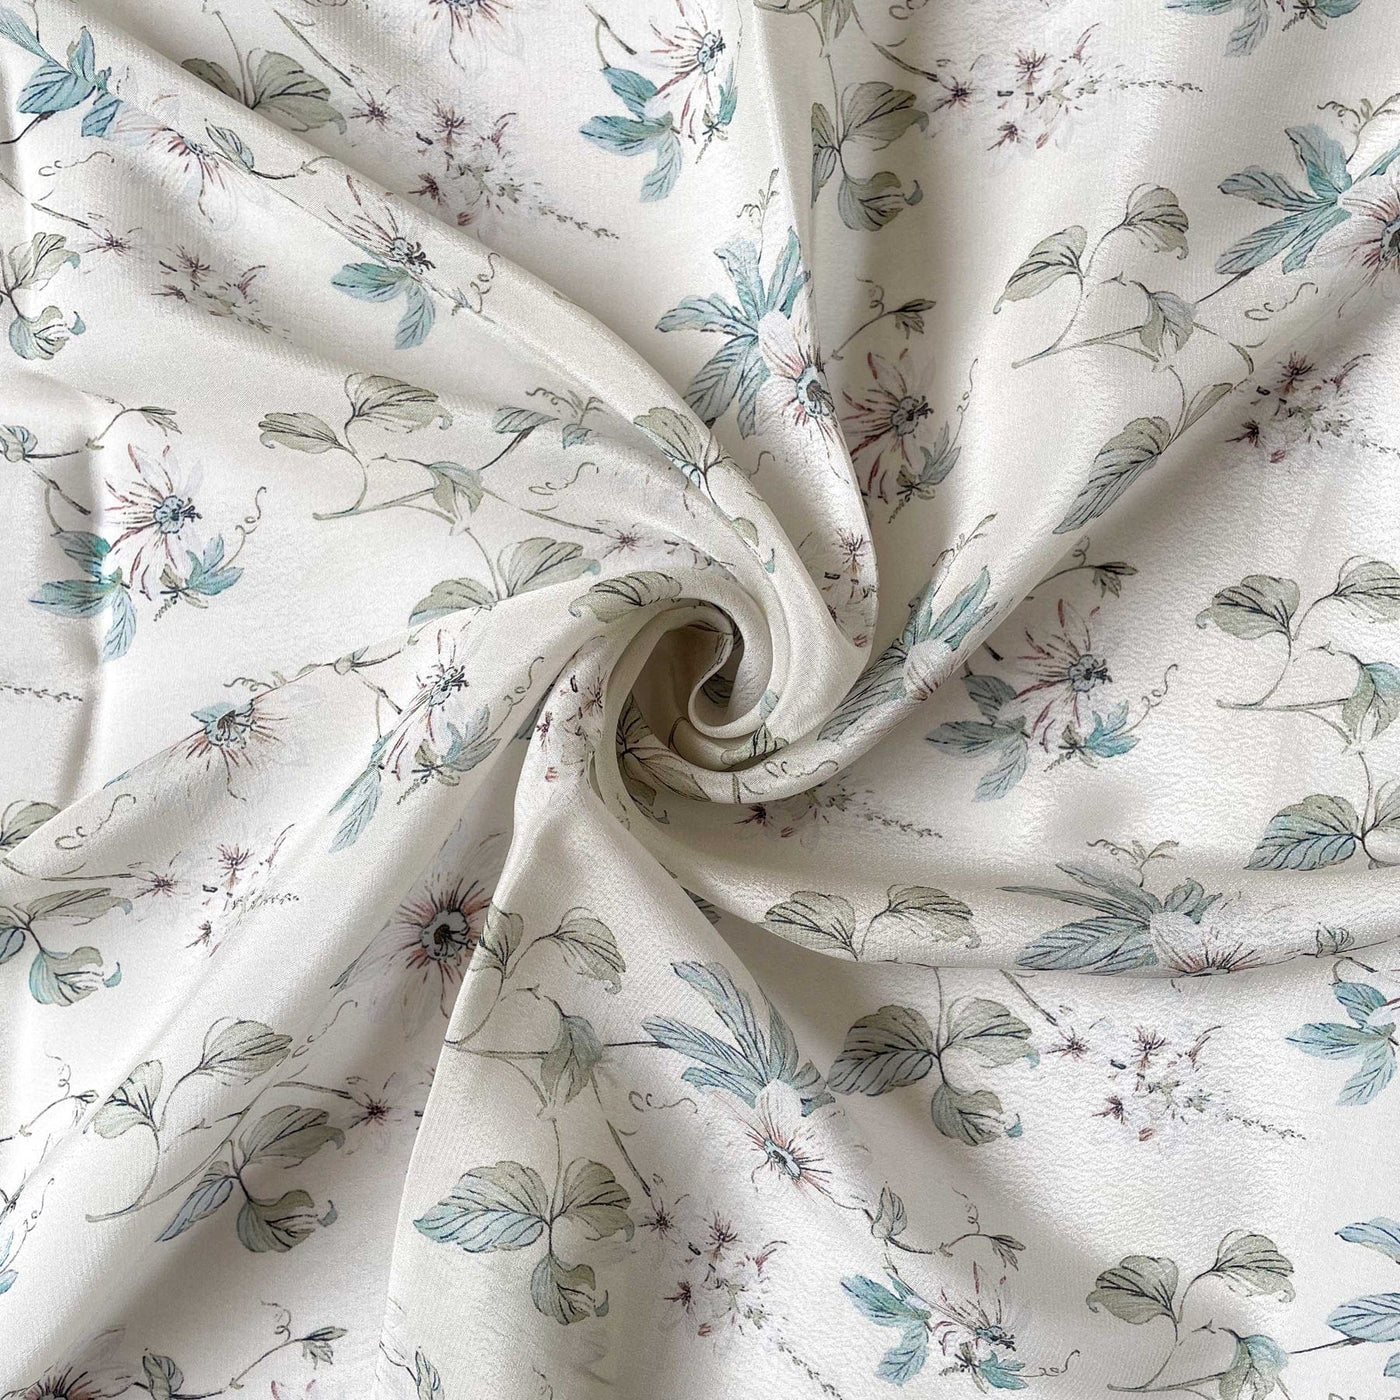 Pale White & Green Botanical Garden Digital Printed Pure Crepe Fabric –  Fabric Pandit